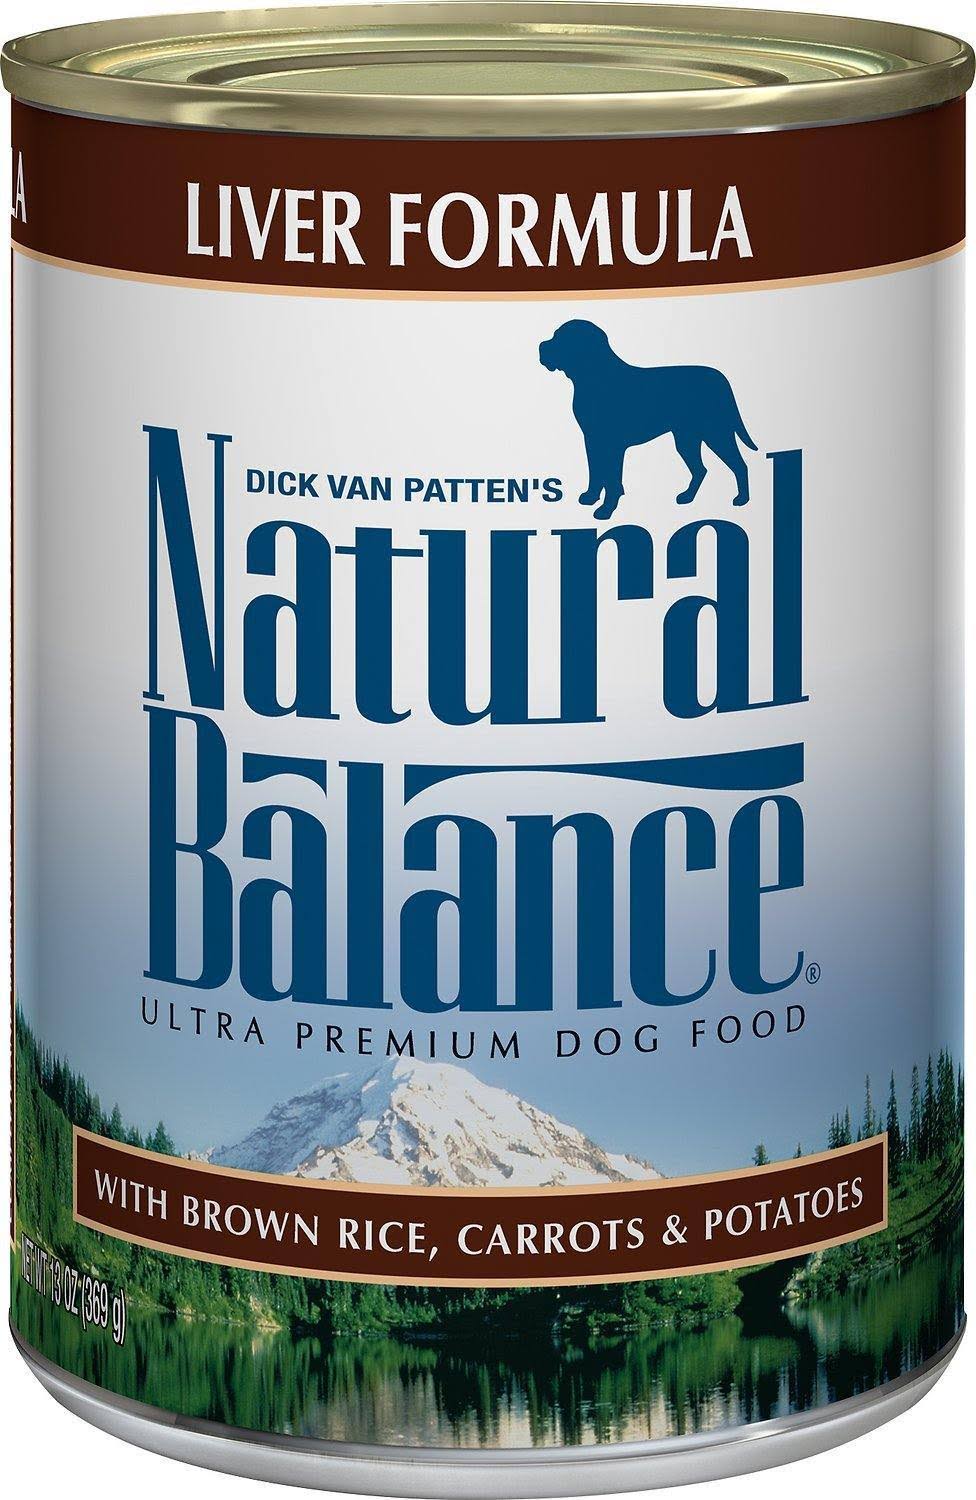 Natural Balance Ultra Premium Dog Food - Liver Formula, 13oz